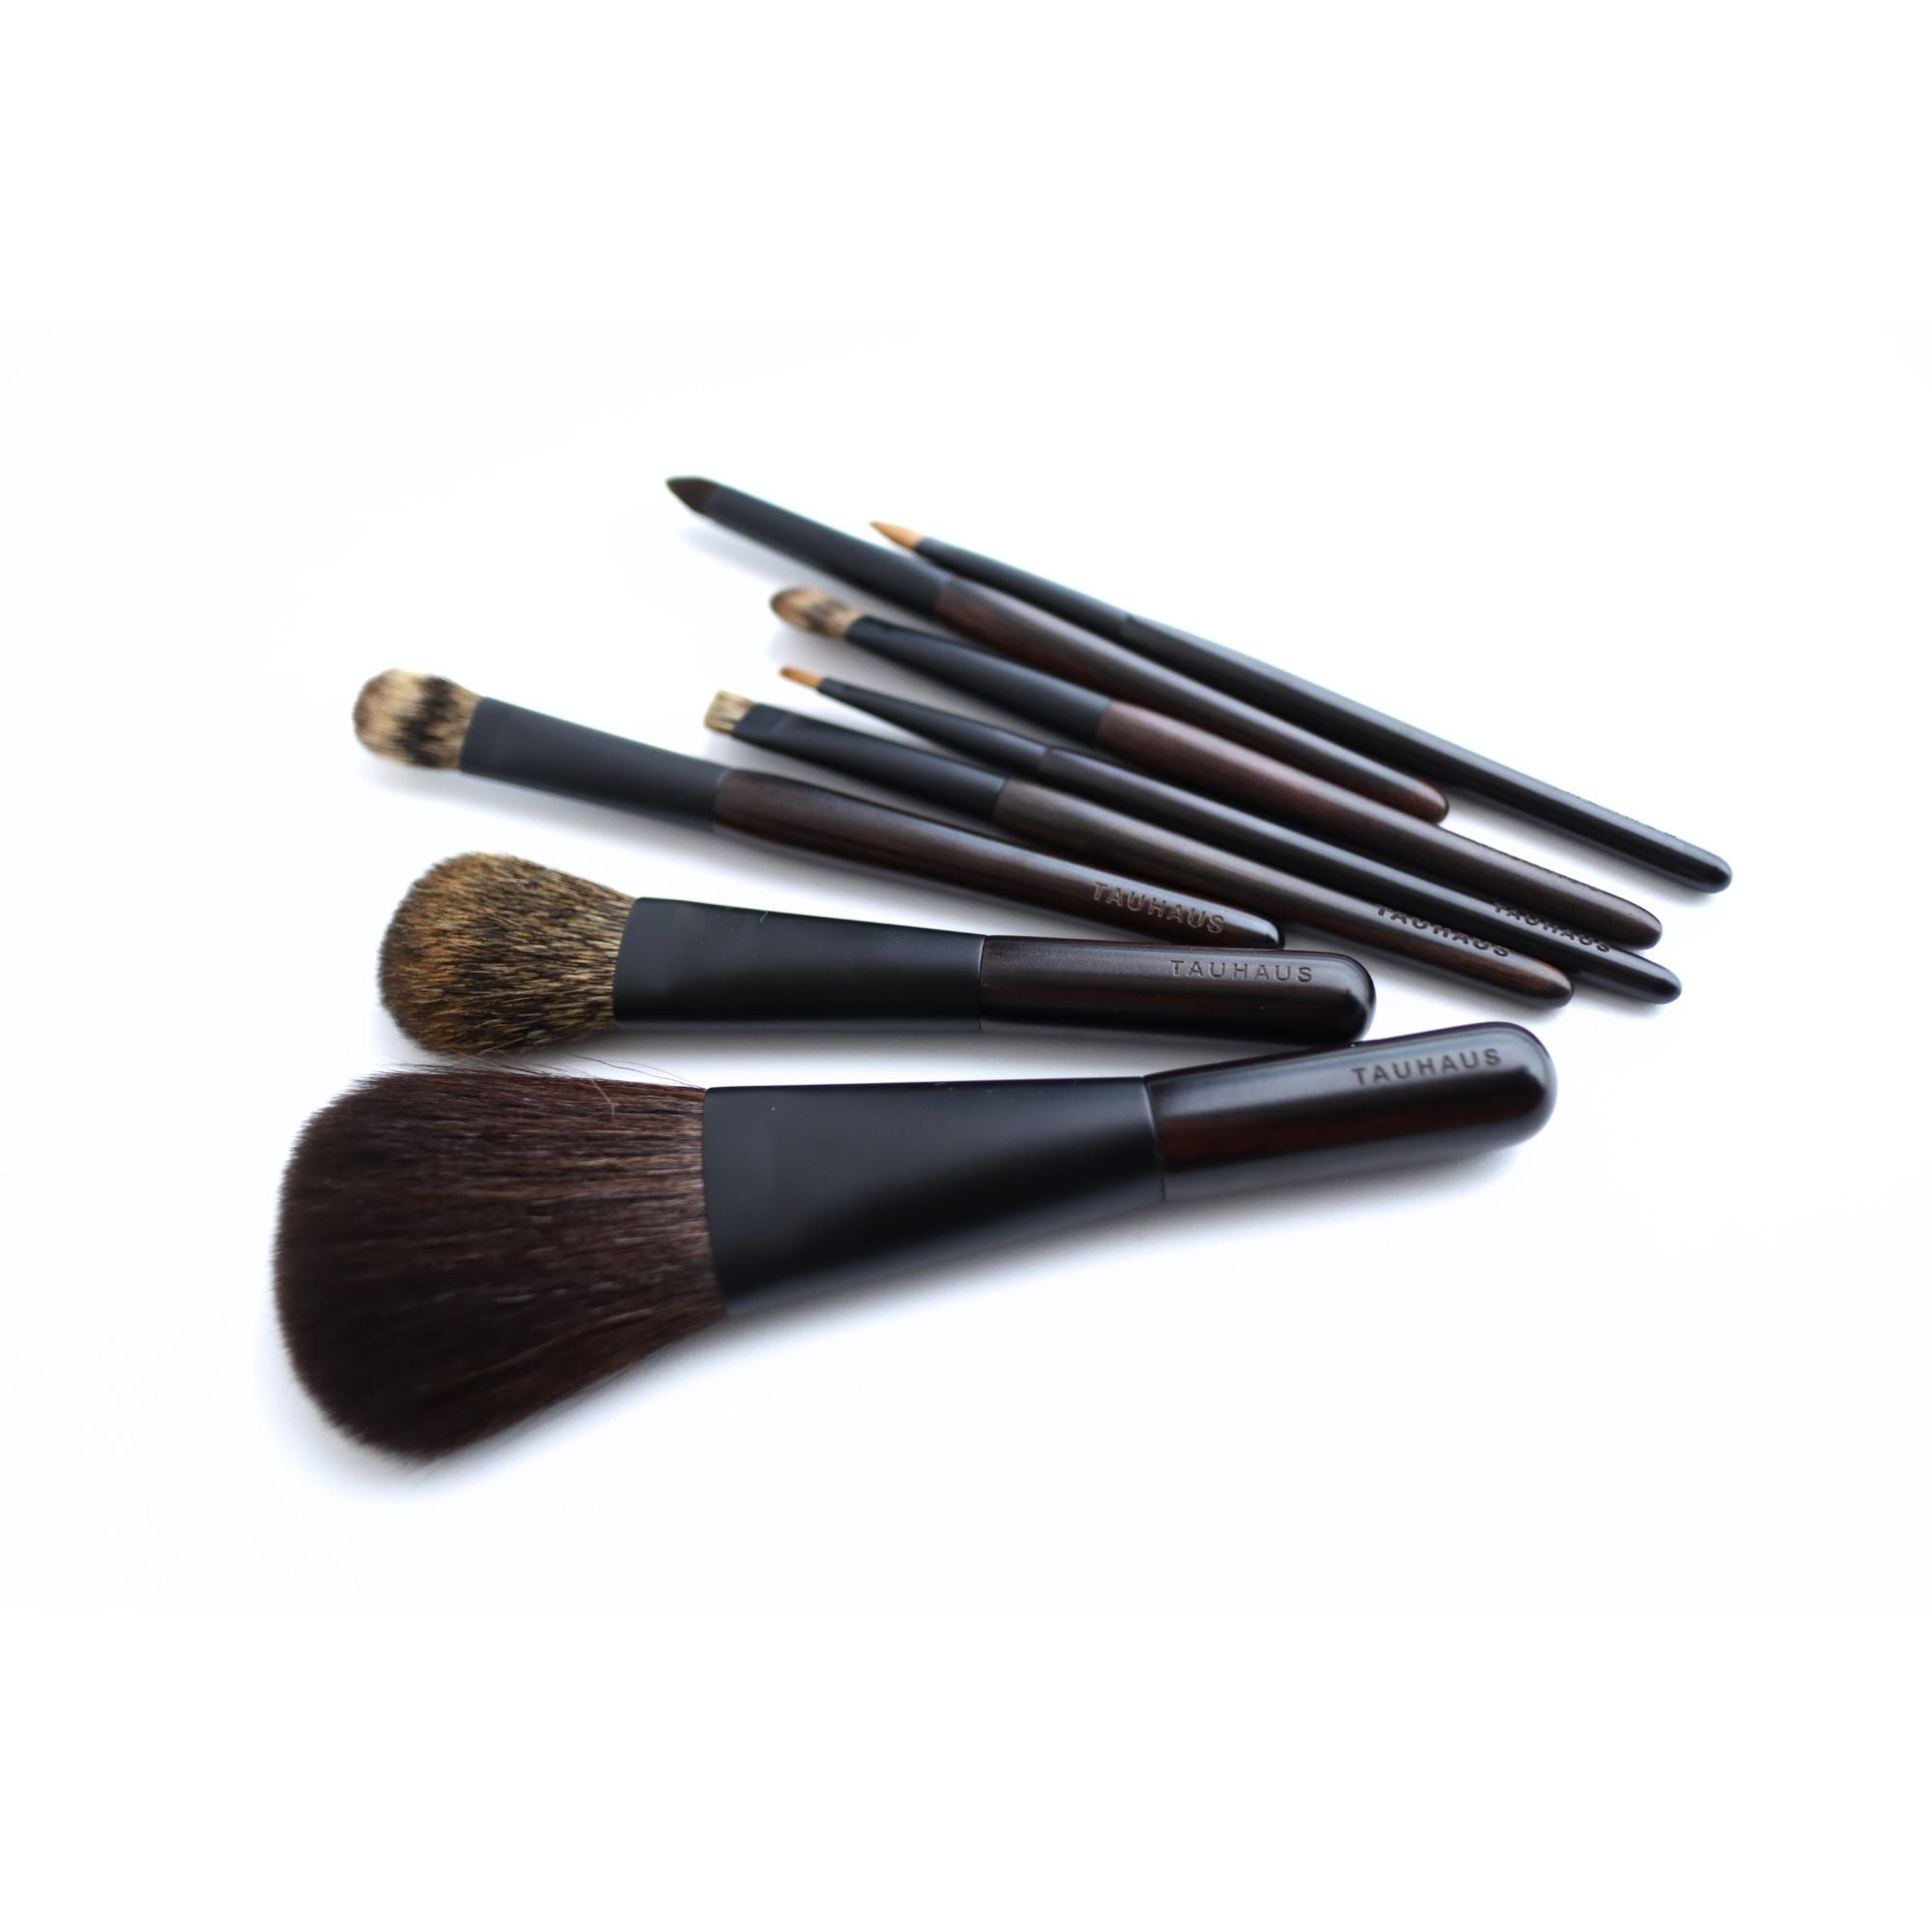 Tauhaus EH-04 Small Eyeshadow Brush, Ode Series - Fude Beauty, Japanese Makeup Brushes